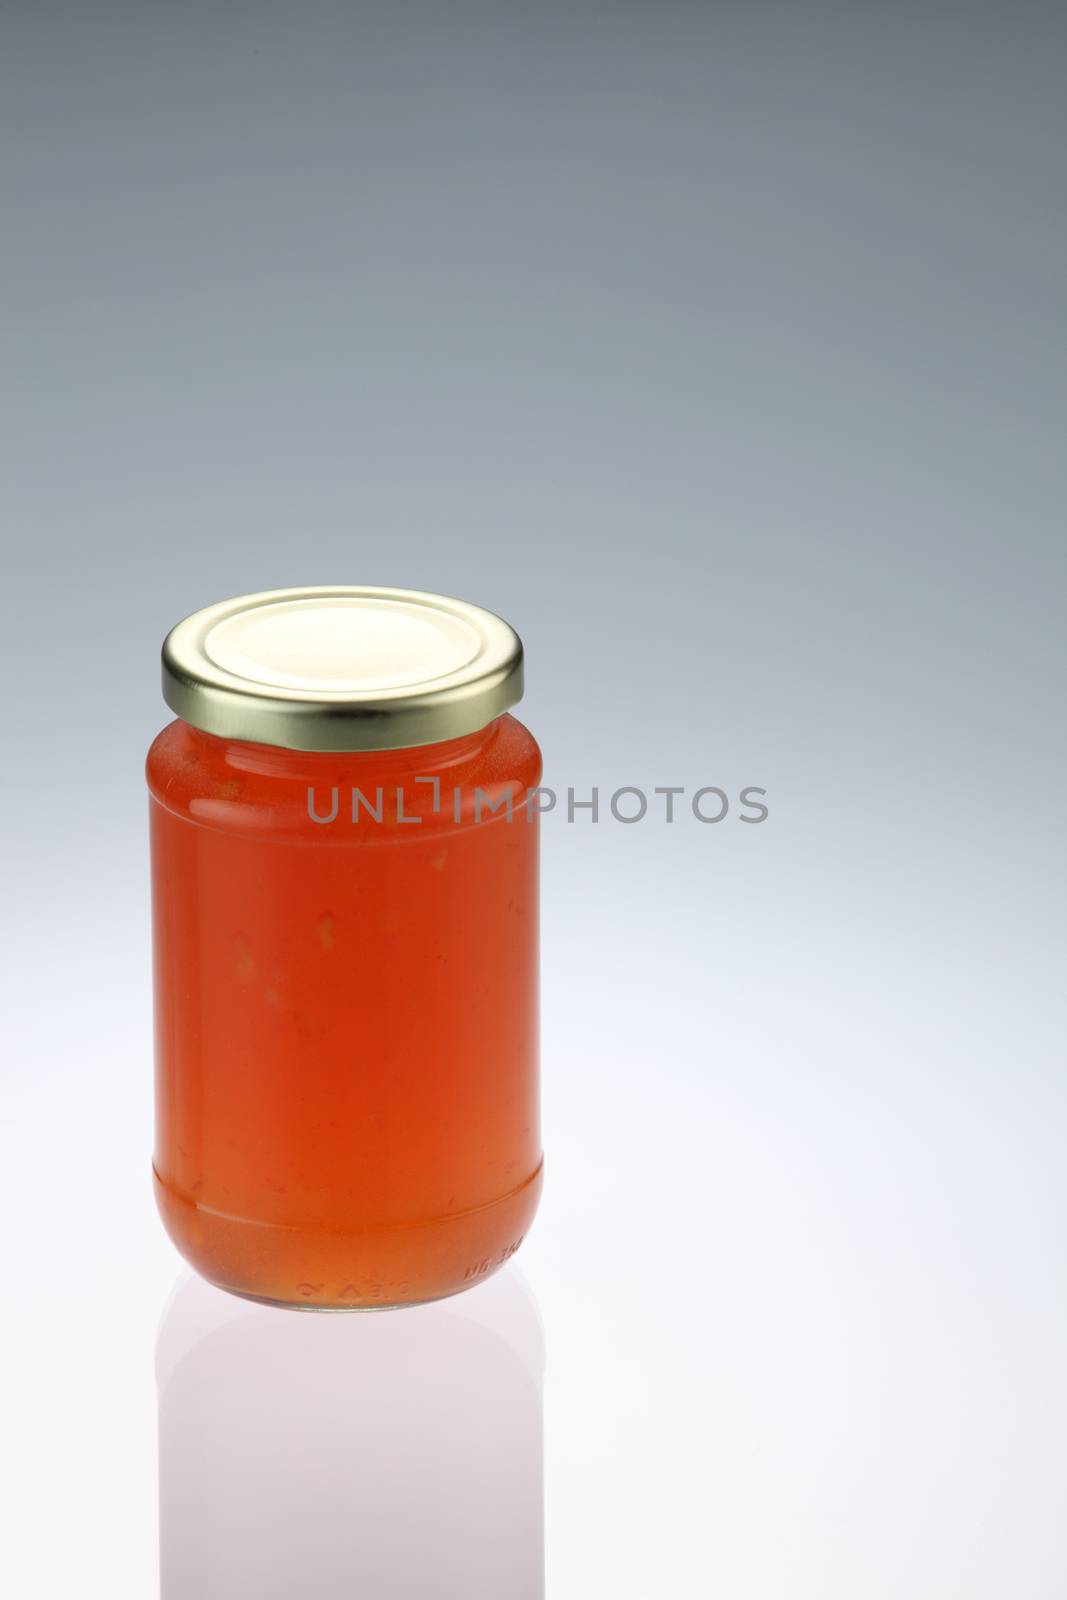 tangerine or citrus fruit jam in the glass container